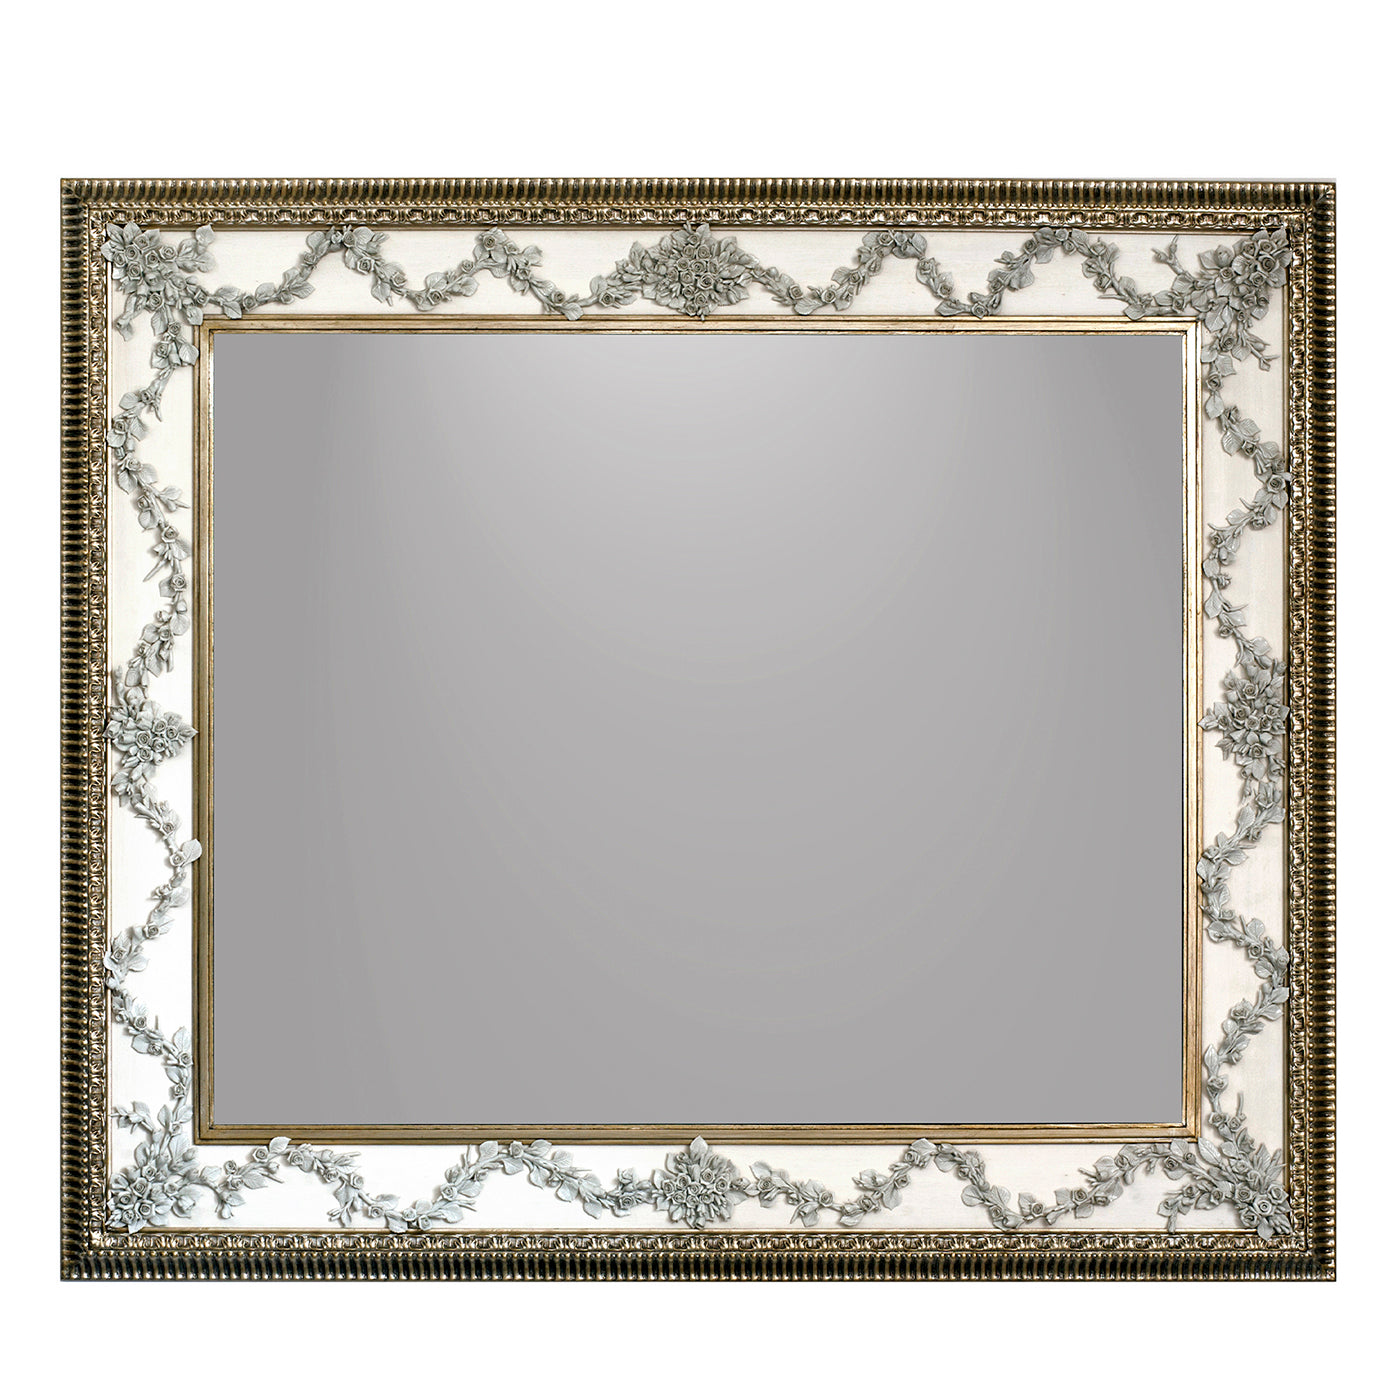 Rosetta Frame Mirror by Studio Caiafa - Main view